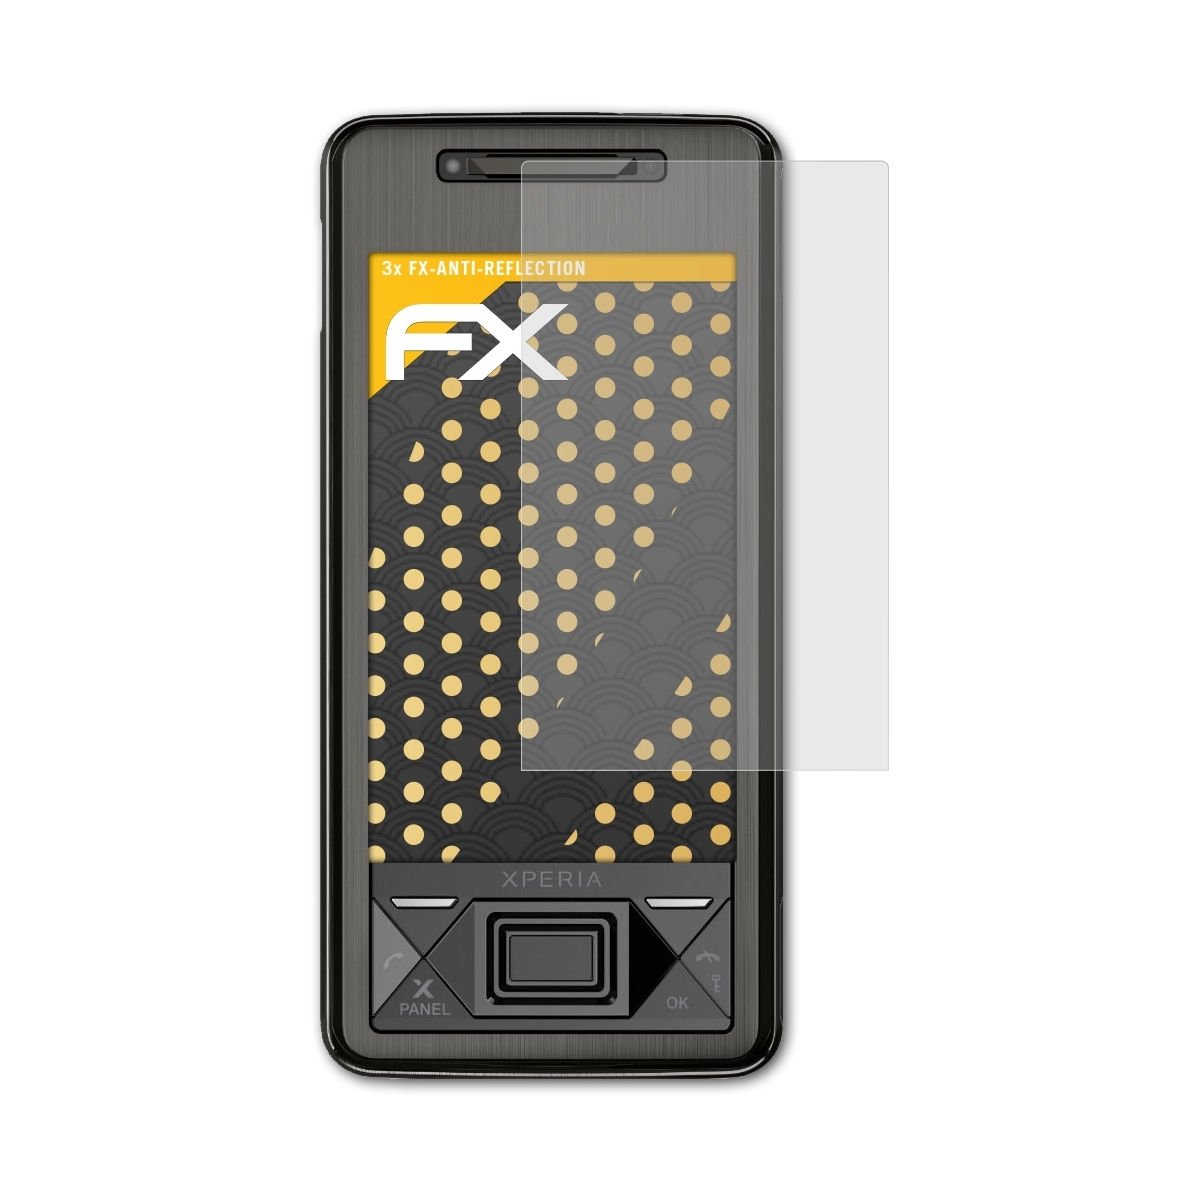 ATFOLIX FX-Antireflex Sony-Ericsson 3x Displayschutz(für Xperia X1)